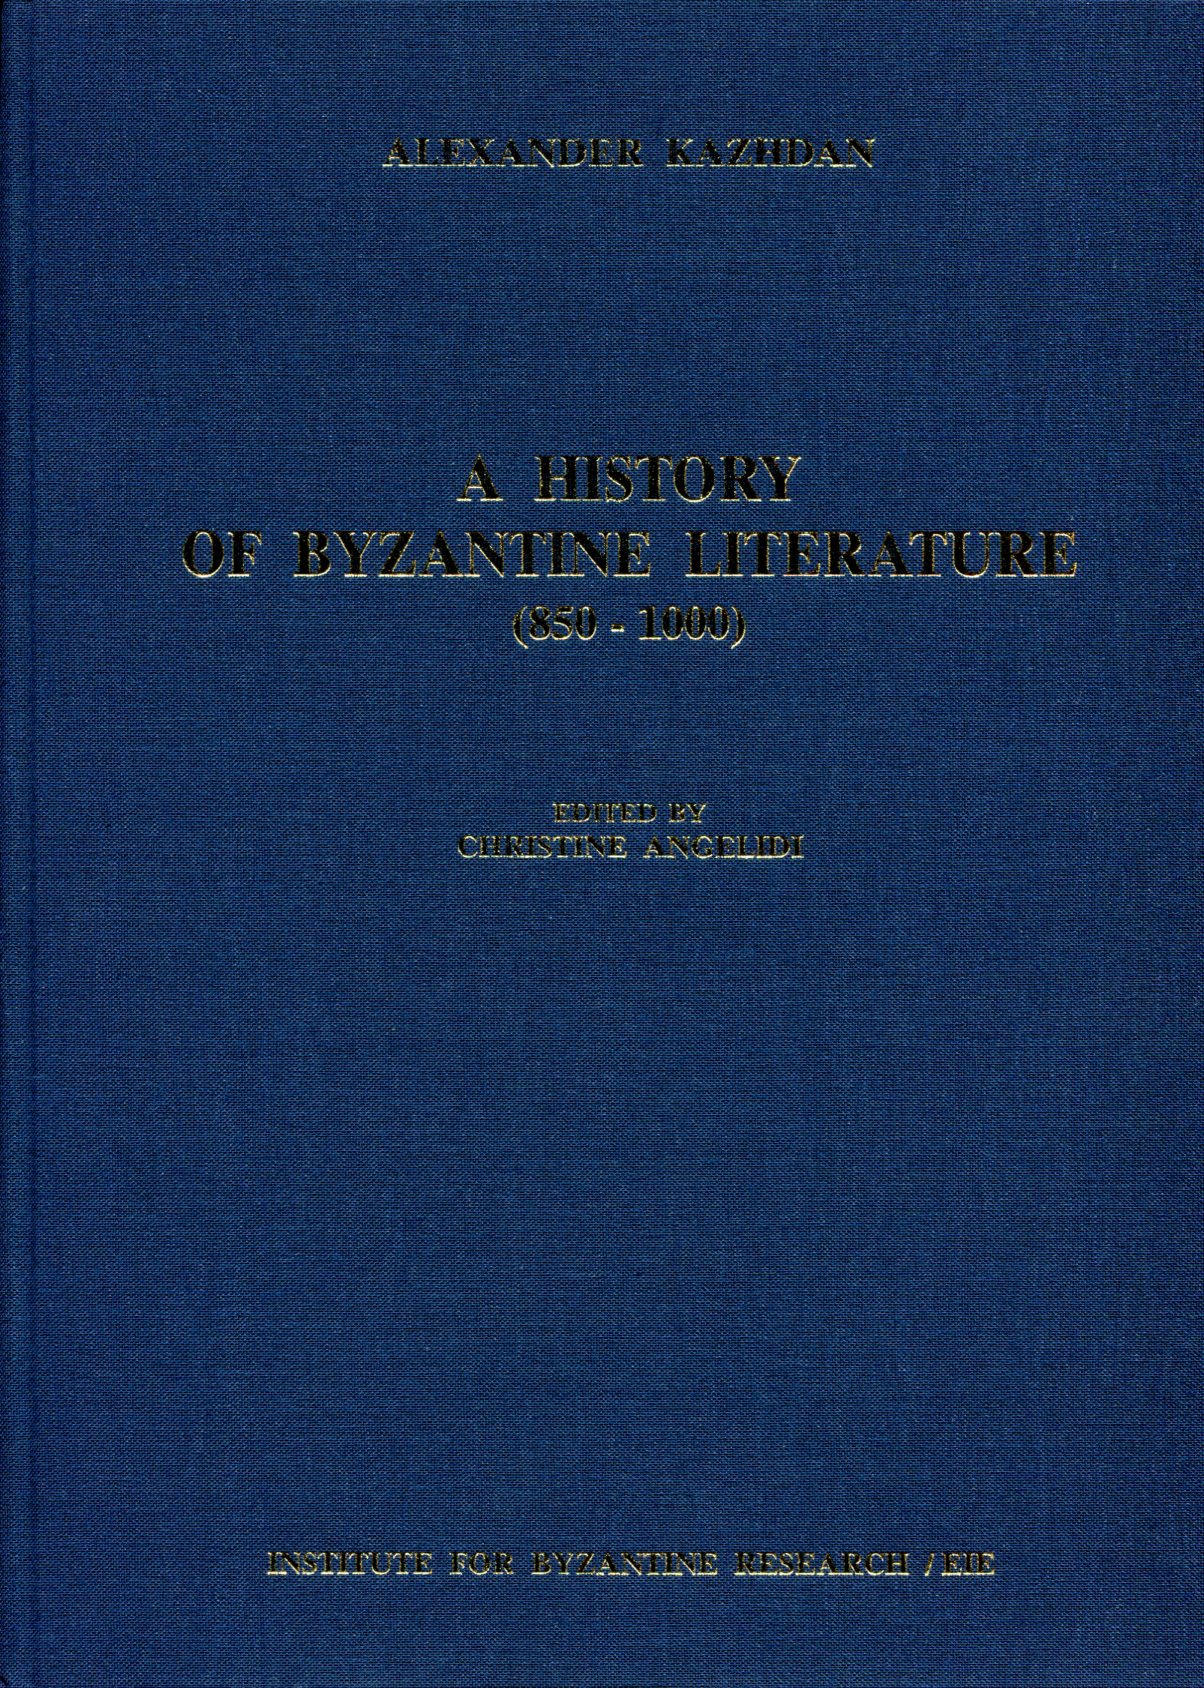 A HISTORY OF BYZANTINE LITERATURE 850-1000